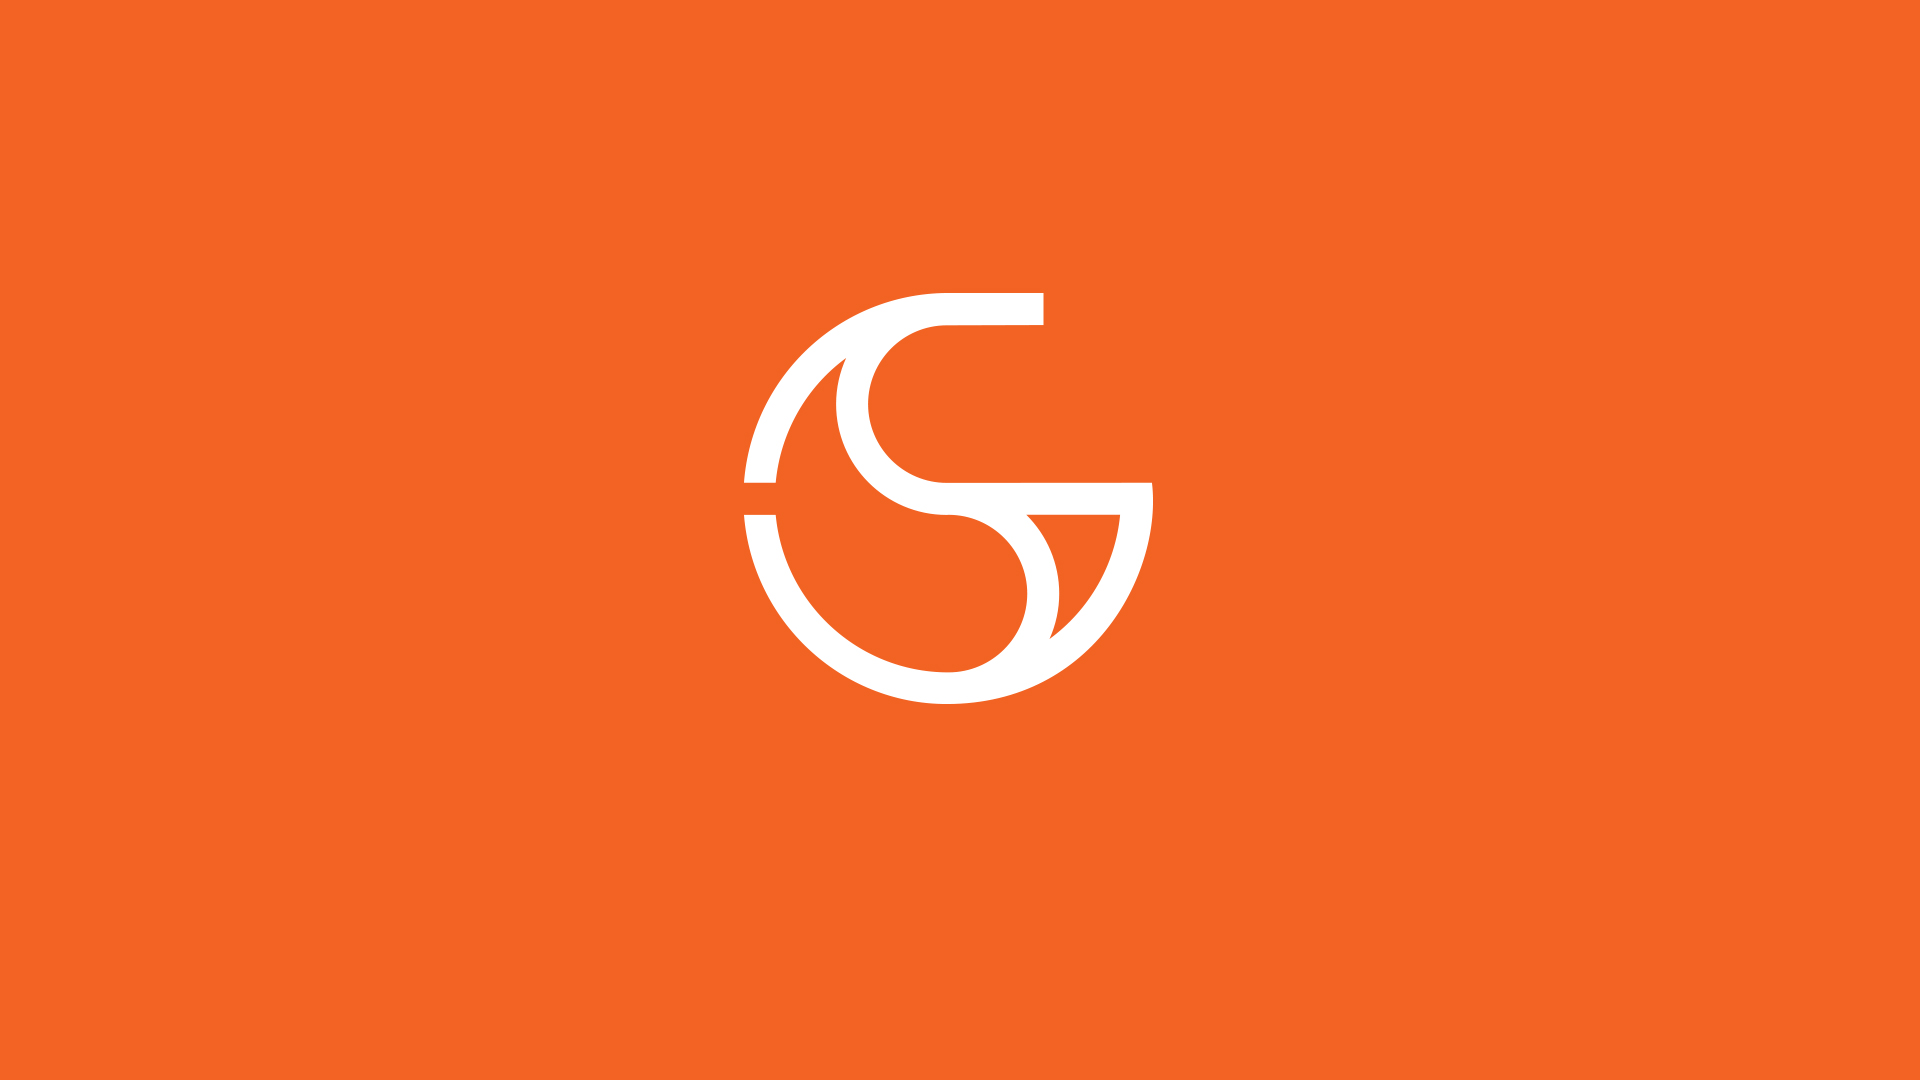 S&G Commodities brand icon on orange backgroud